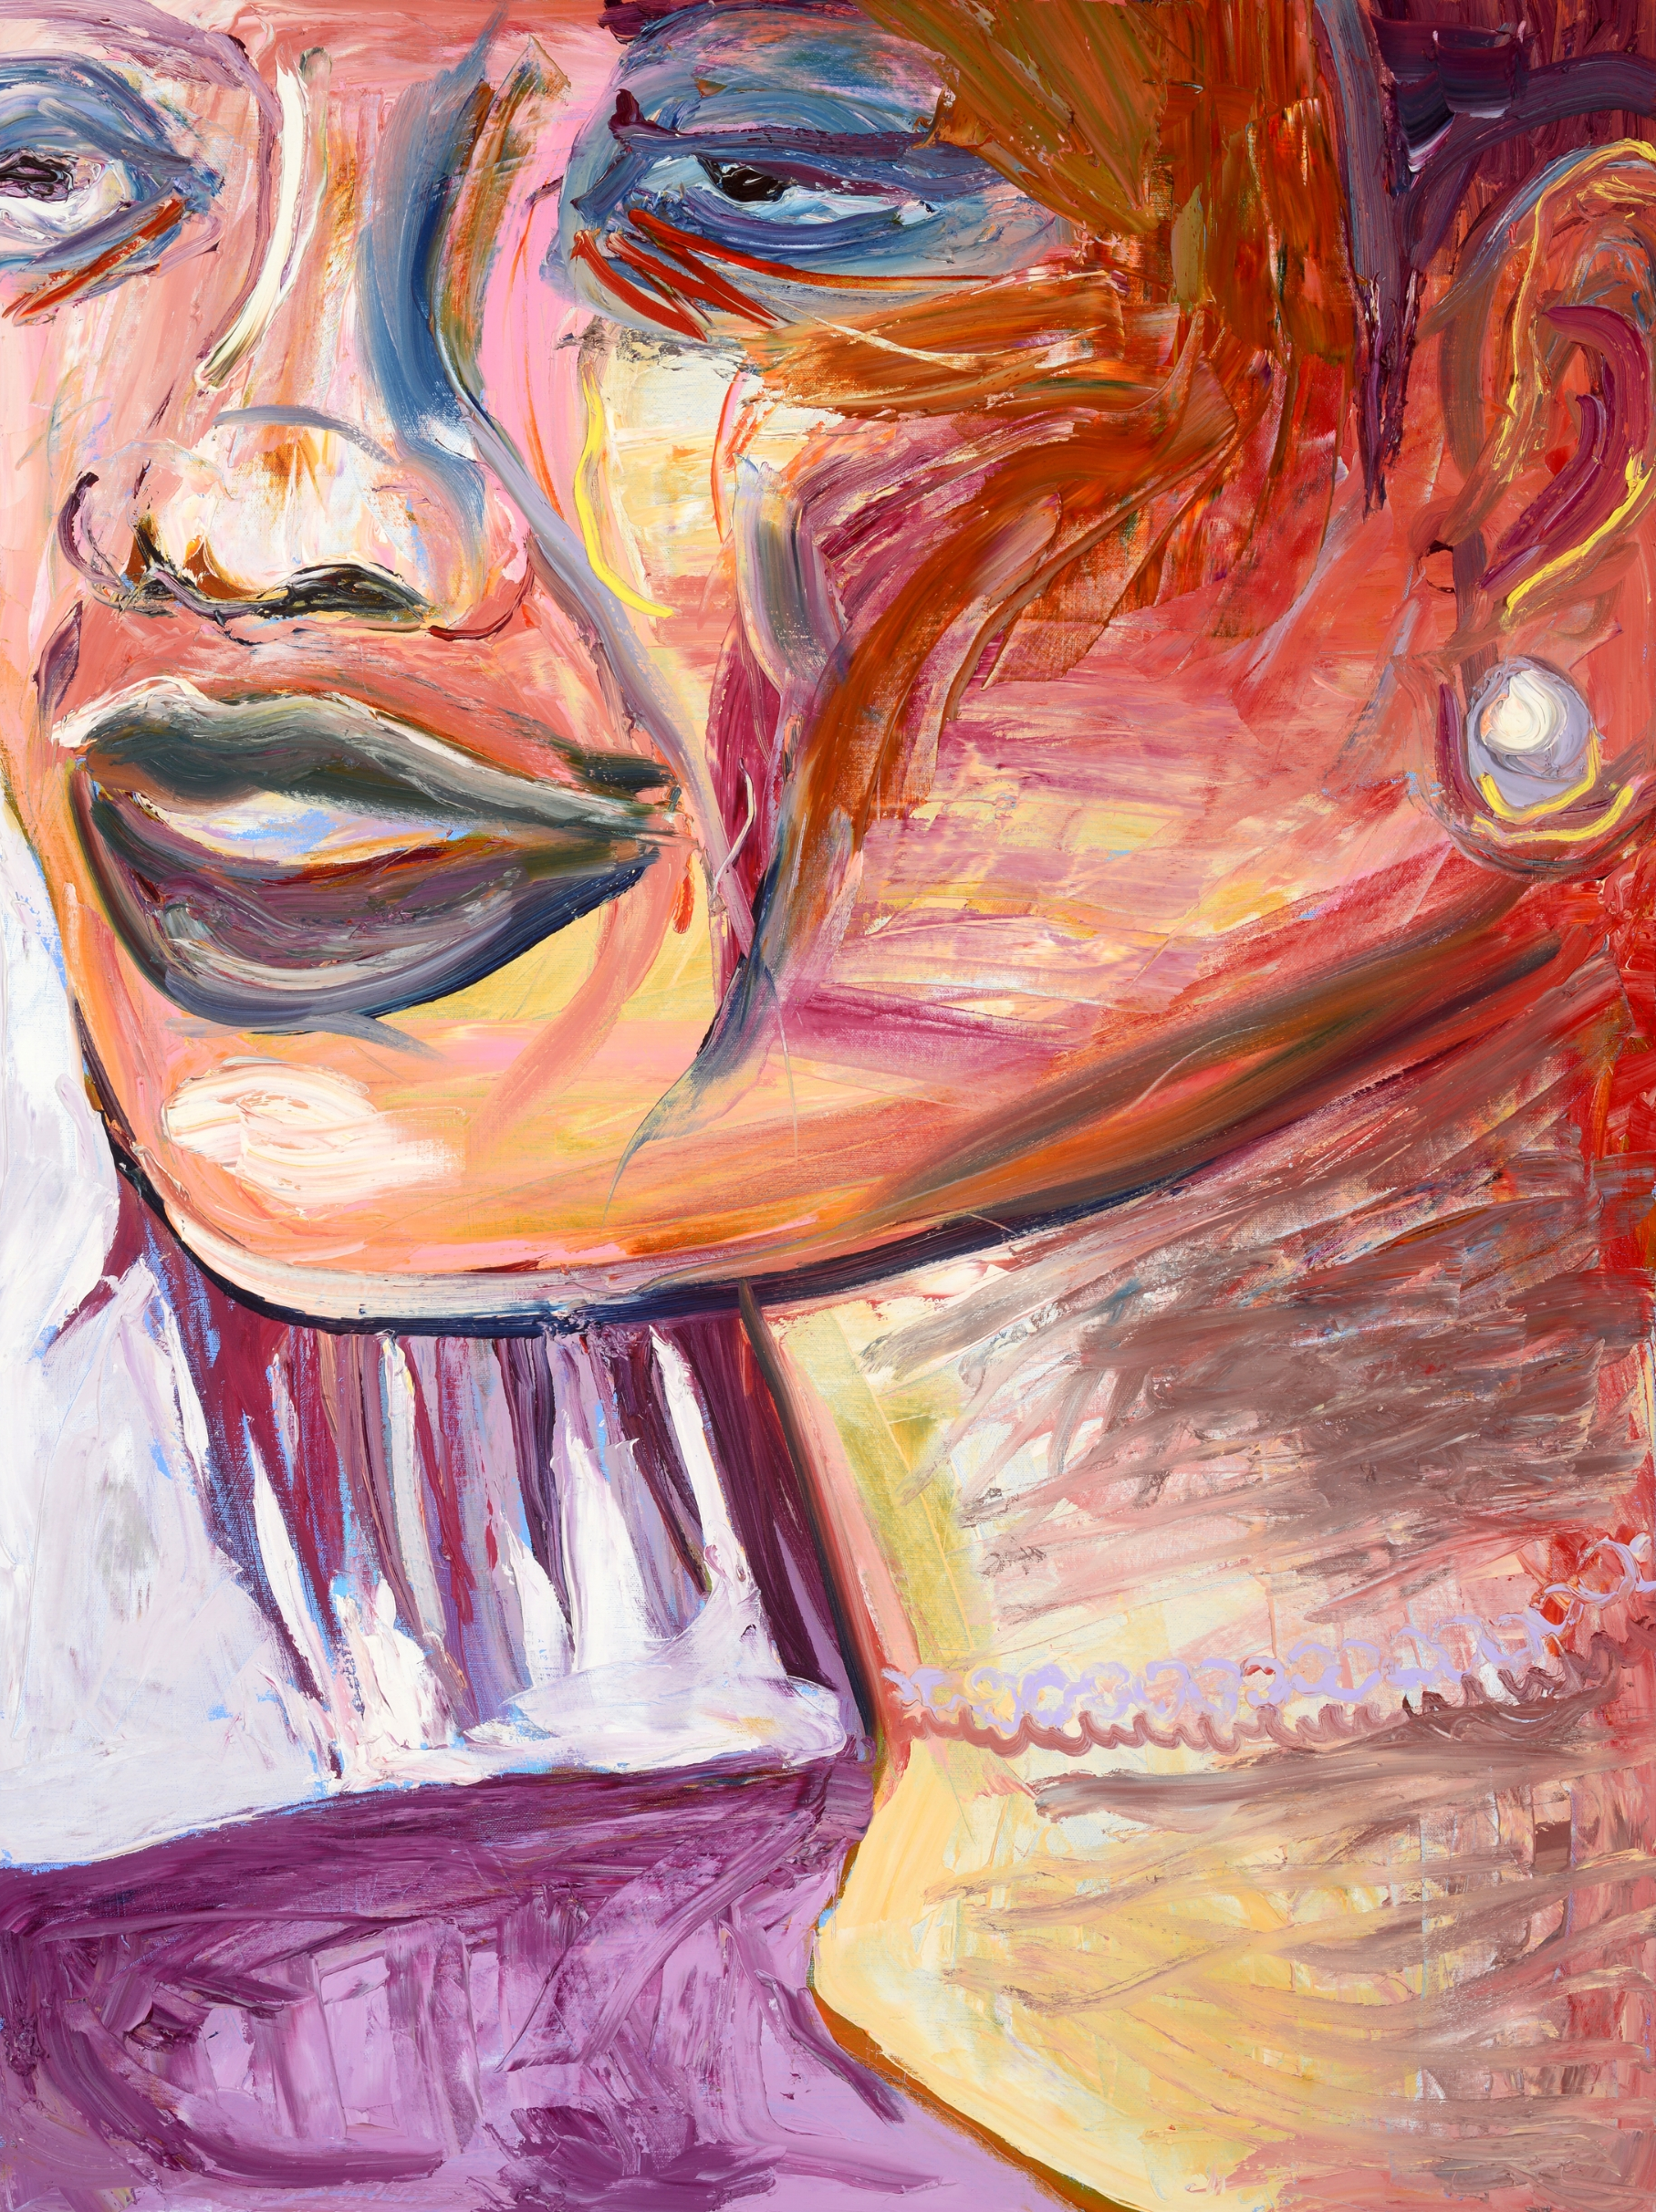 Dom. Oil and acrylic on canvas. 2015.